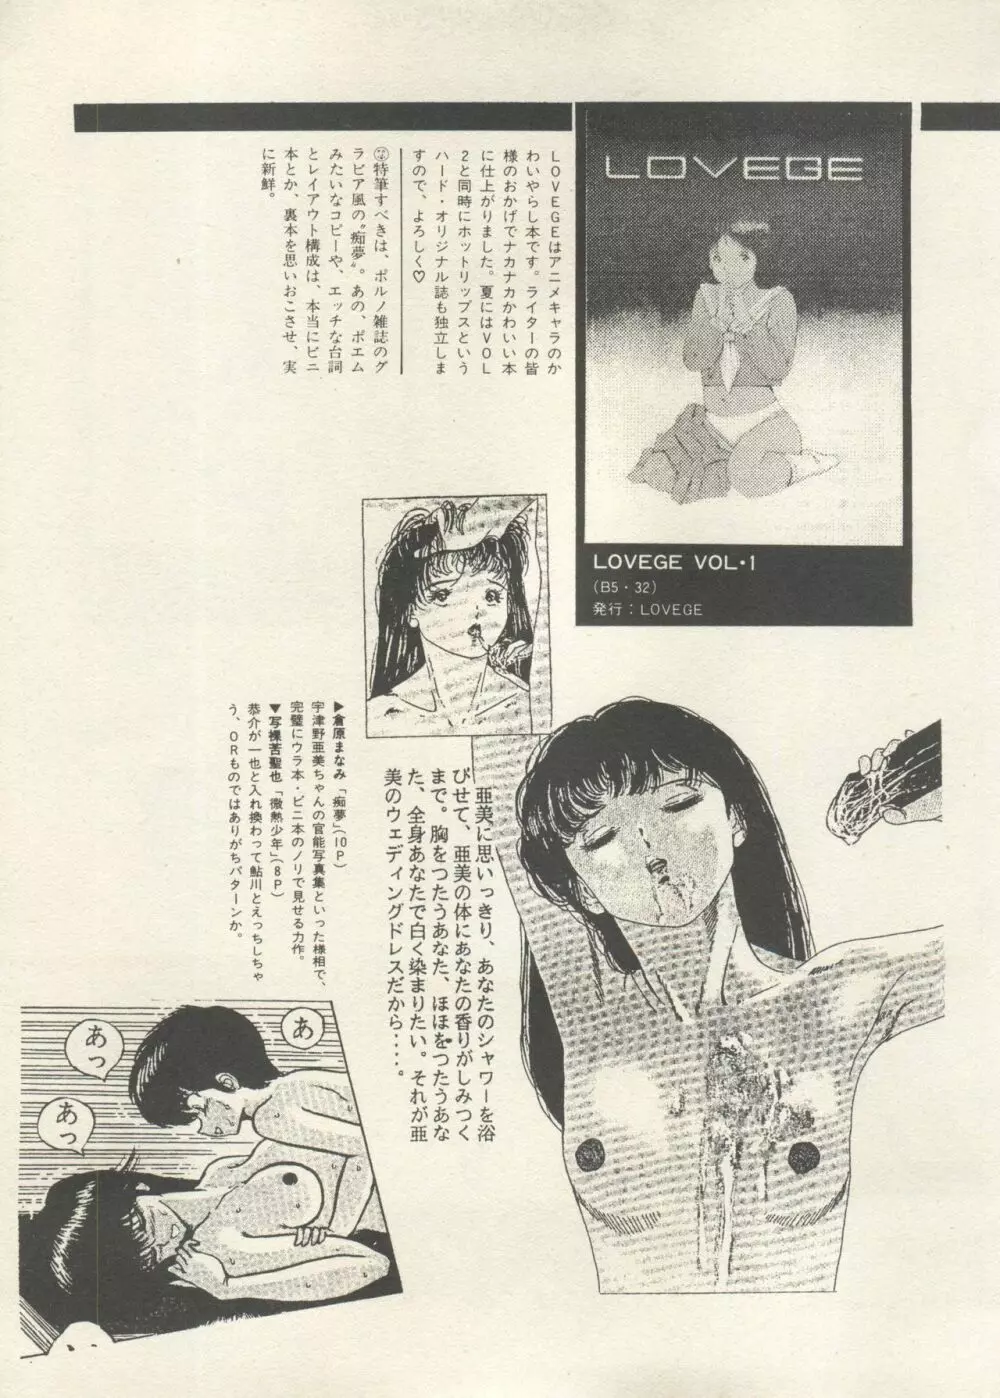 美少女症候群 - Lolita Syndrome 7 Page.66